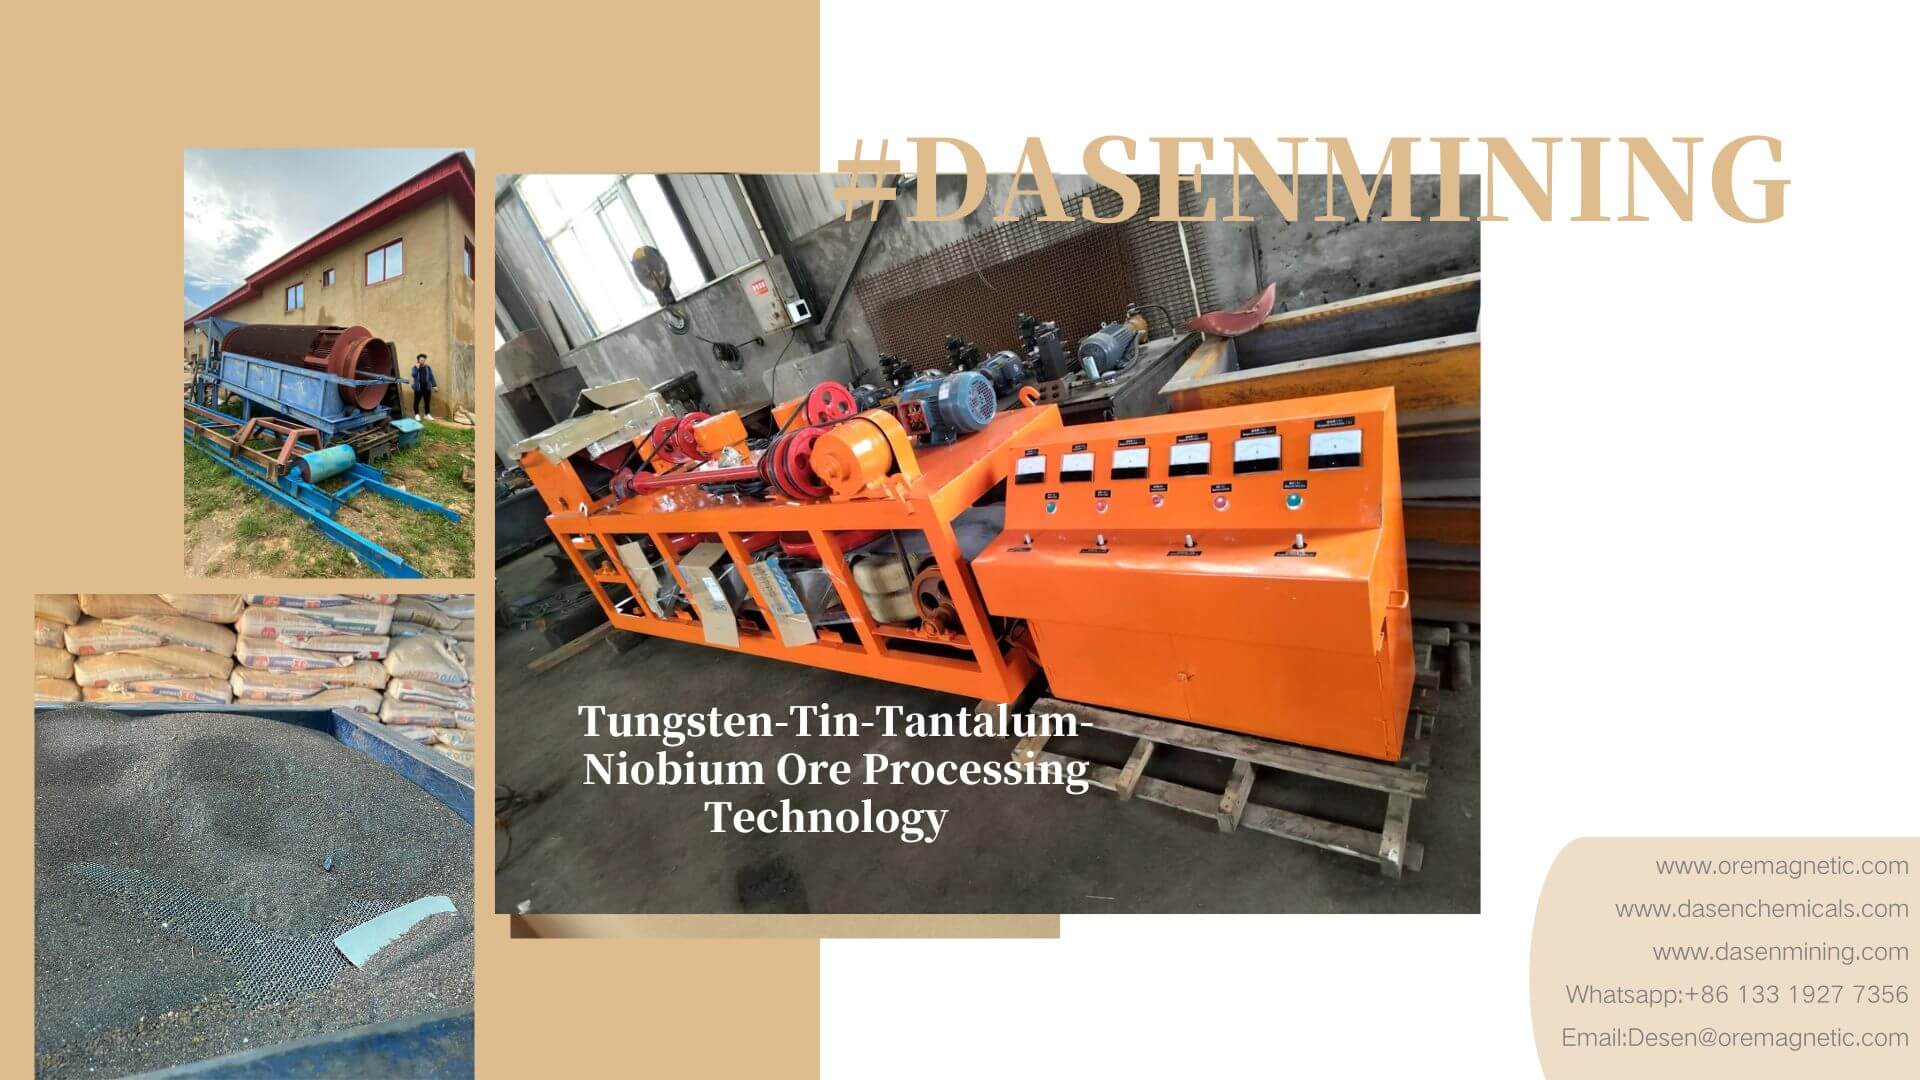 钨锡坦铌 - Tungsten-Tin-Tantalum-Niobium Ore Processing Technology and its Advantages